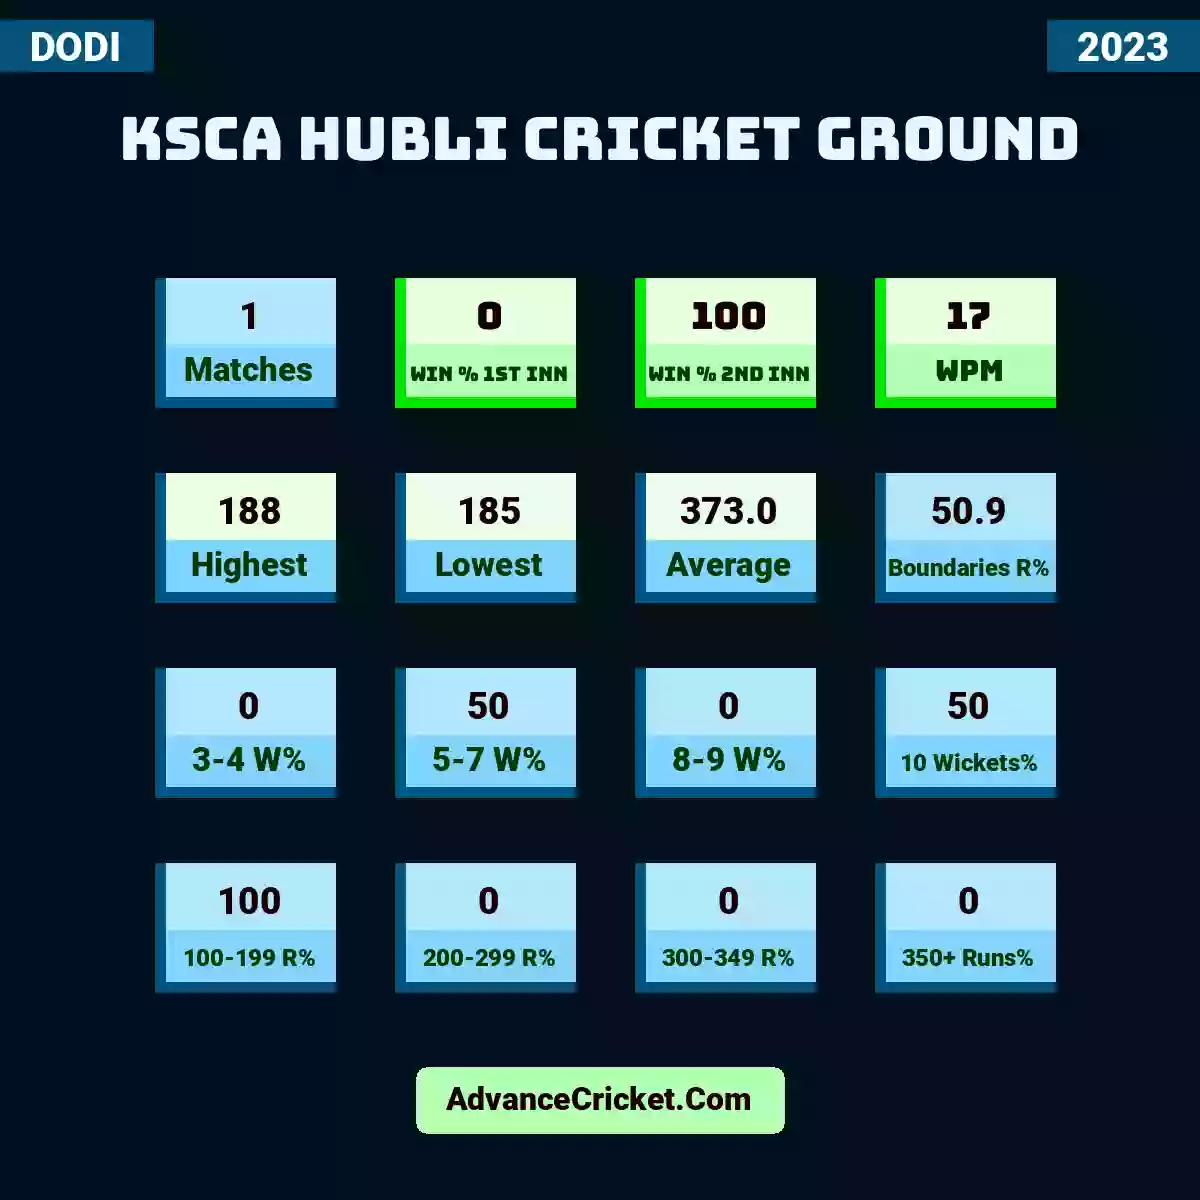 Image showing KSCA Hubli Cricket Ground with Matches: 1, Win % 1st Inn: 0, Win % 2nd Inn: 100, WPM: 17, Highest: 188, Lowest: 185, Average: 373.0, Boundaries R%: 50.9, 3-4 W%: 0, 5-7 W%: 50, 8-9 W%: 0, 10 Wickets%: 50, 100-199 R%: 100, 200-299 R%: 0, 300-349 R%: 0, 350+ Runs%: 0.